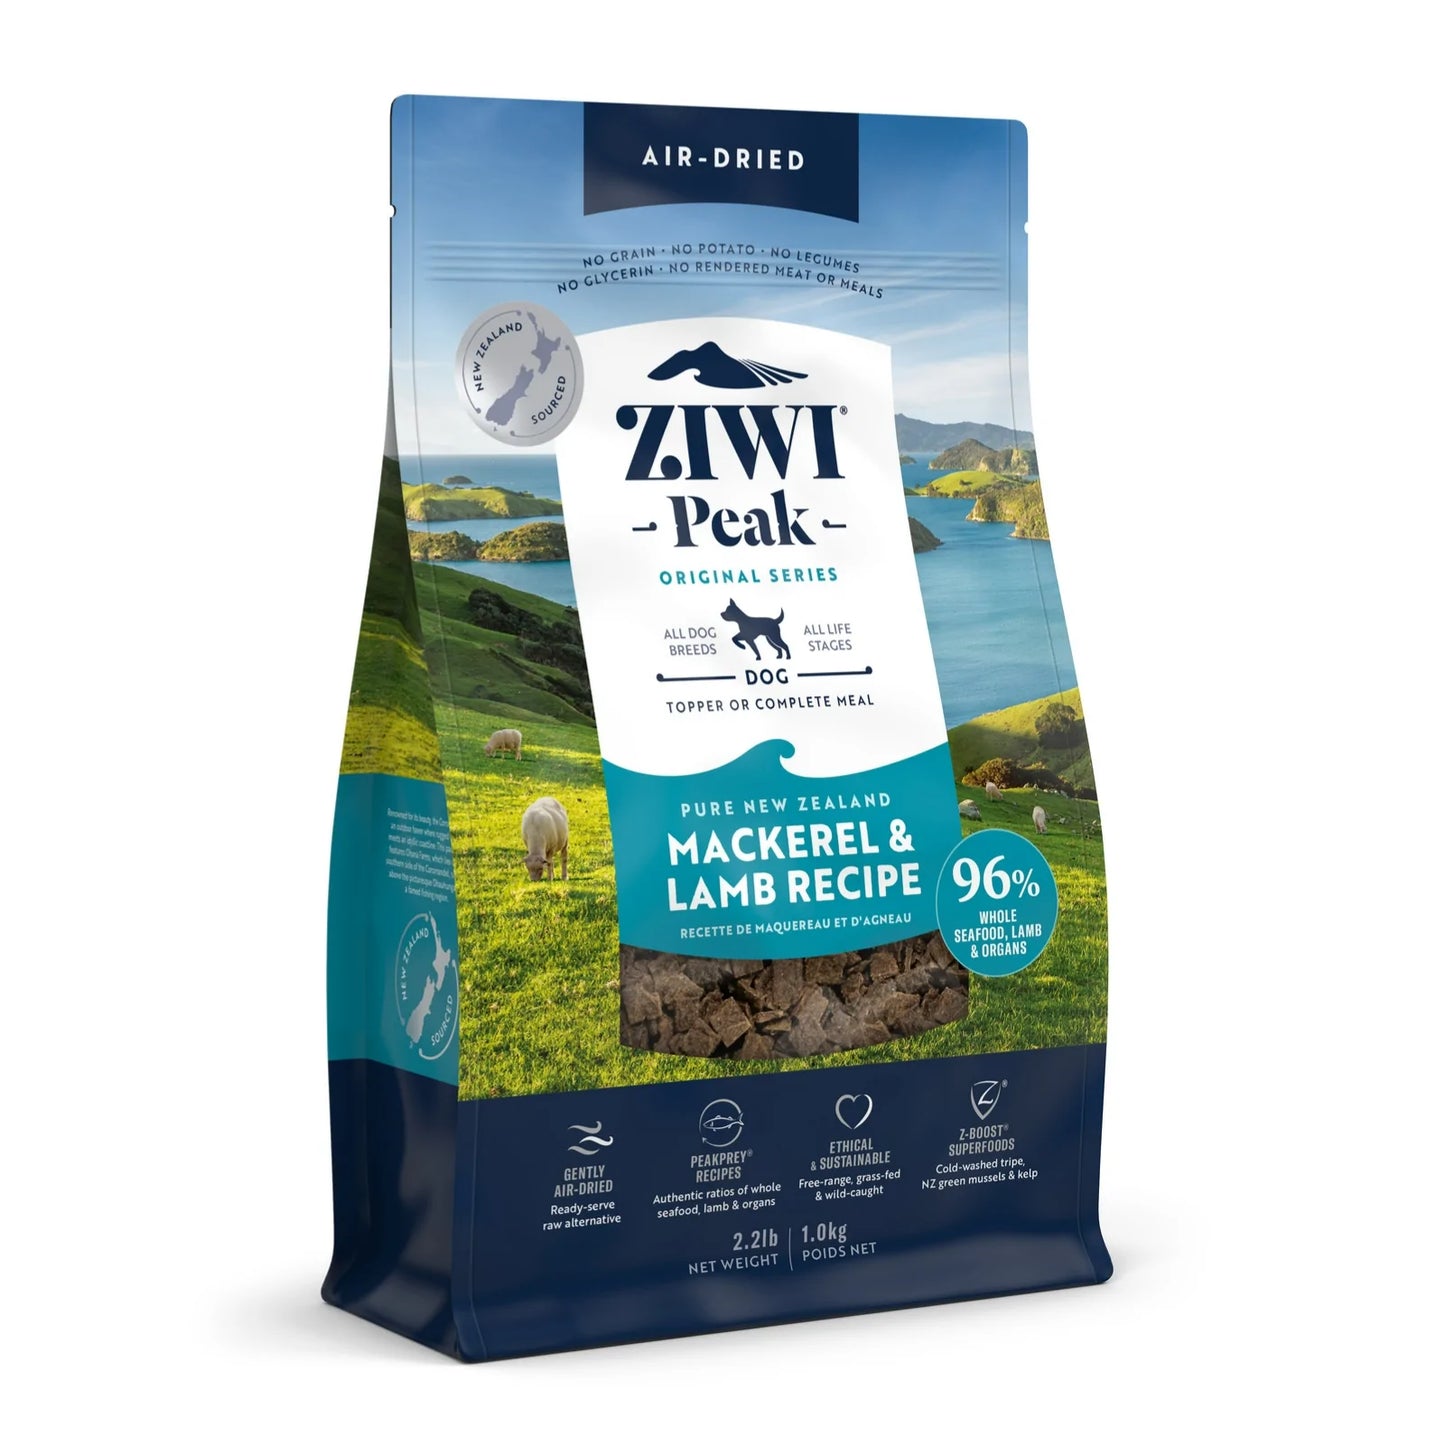 ZiwiPeak Mackerel & Lamb Recipe, Air-Dried Dog Food